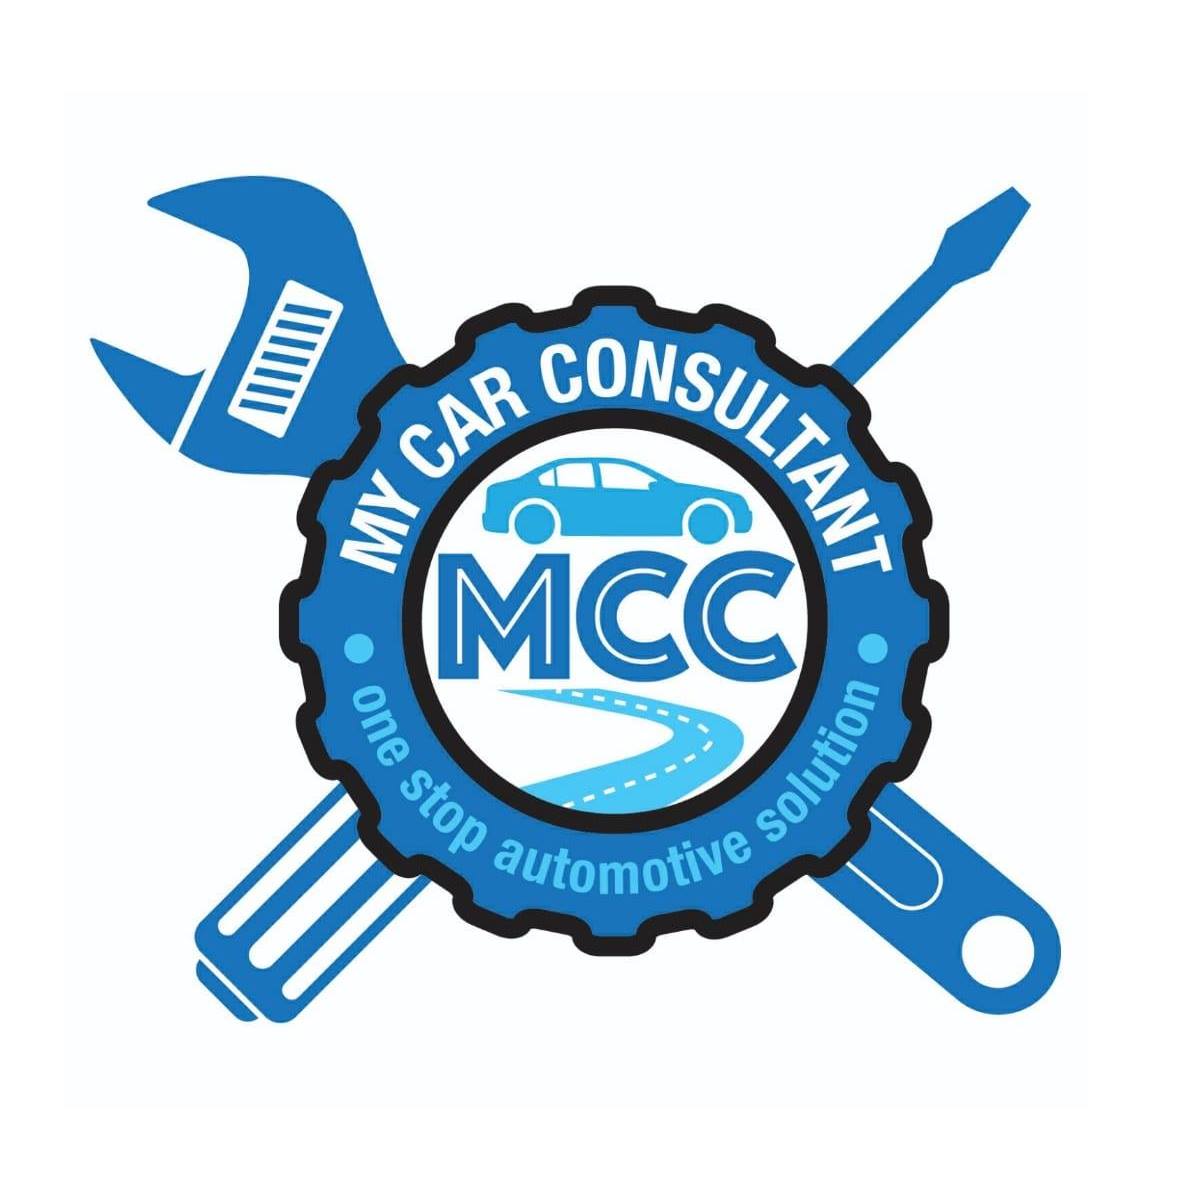 My Car Consultant Pte. Ltd. company logo